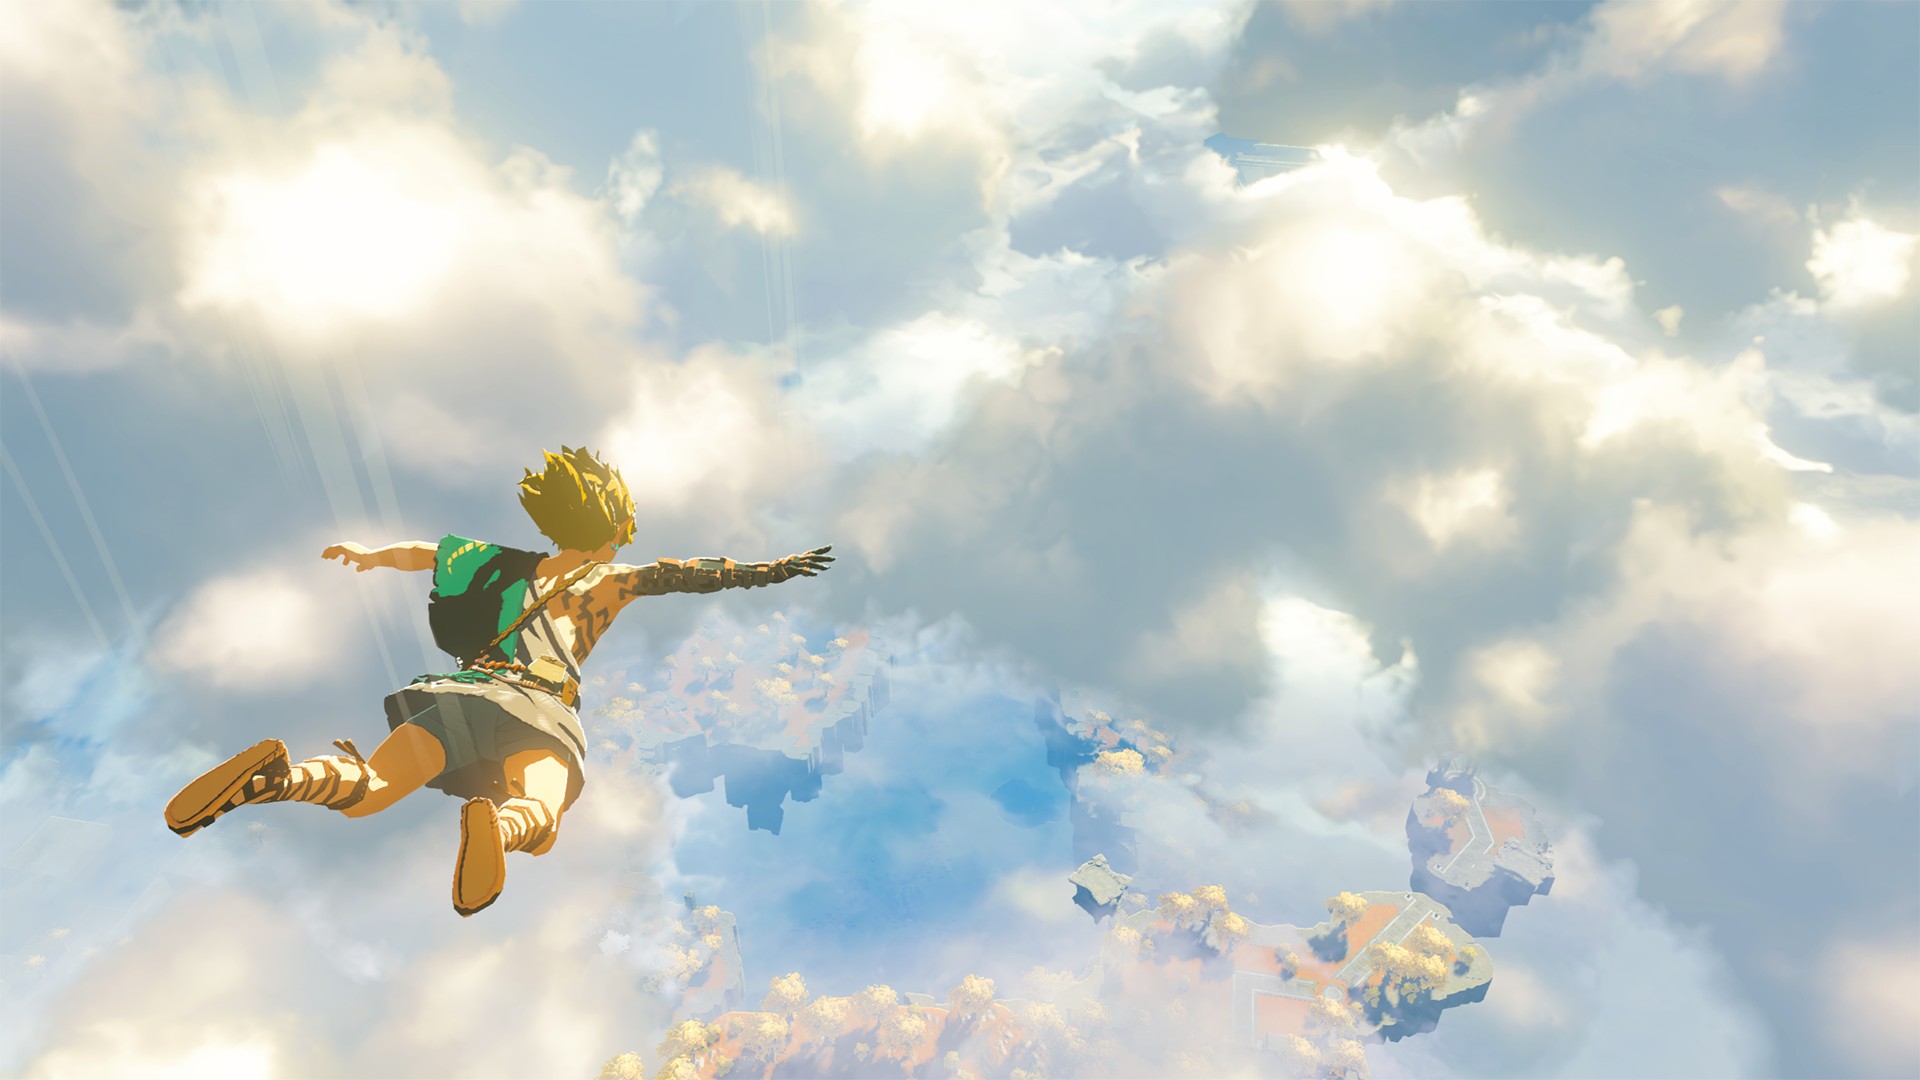 Zelda Breath of the Wild 2: Ganon, Flamethrowers, and More E3 Trailer Secrets - Den of Geek